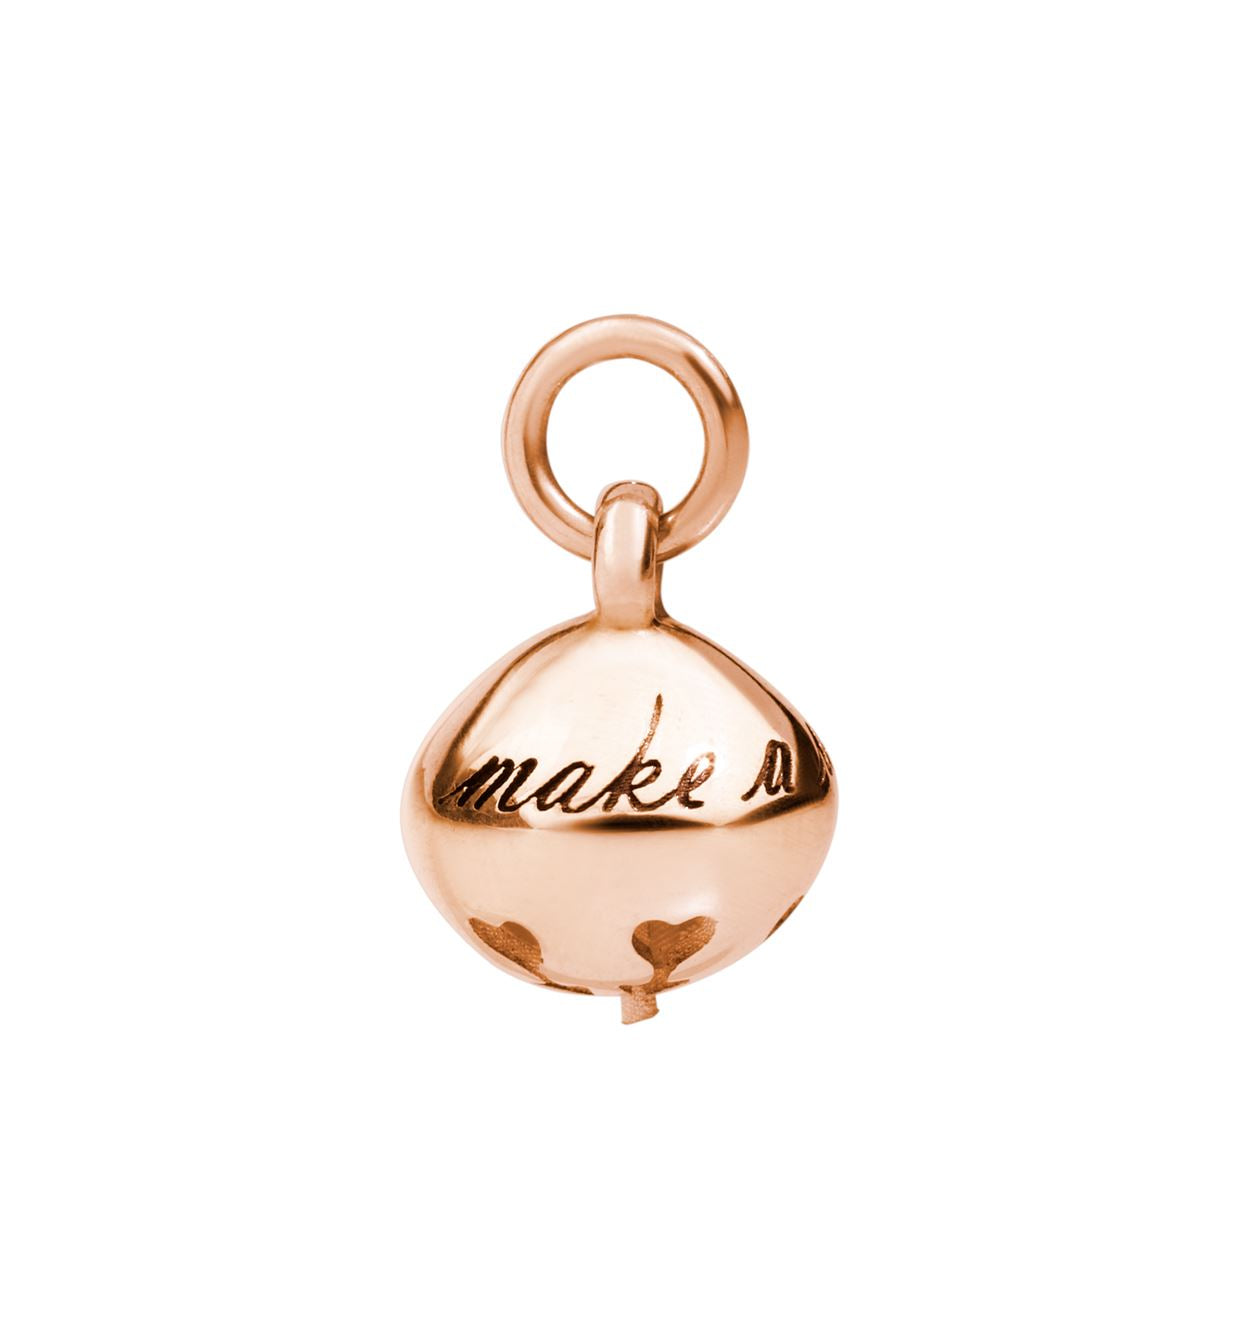 DoDo Bell in 9k Rose Gold "Make a Wish" - Orsini Jewellers NZ